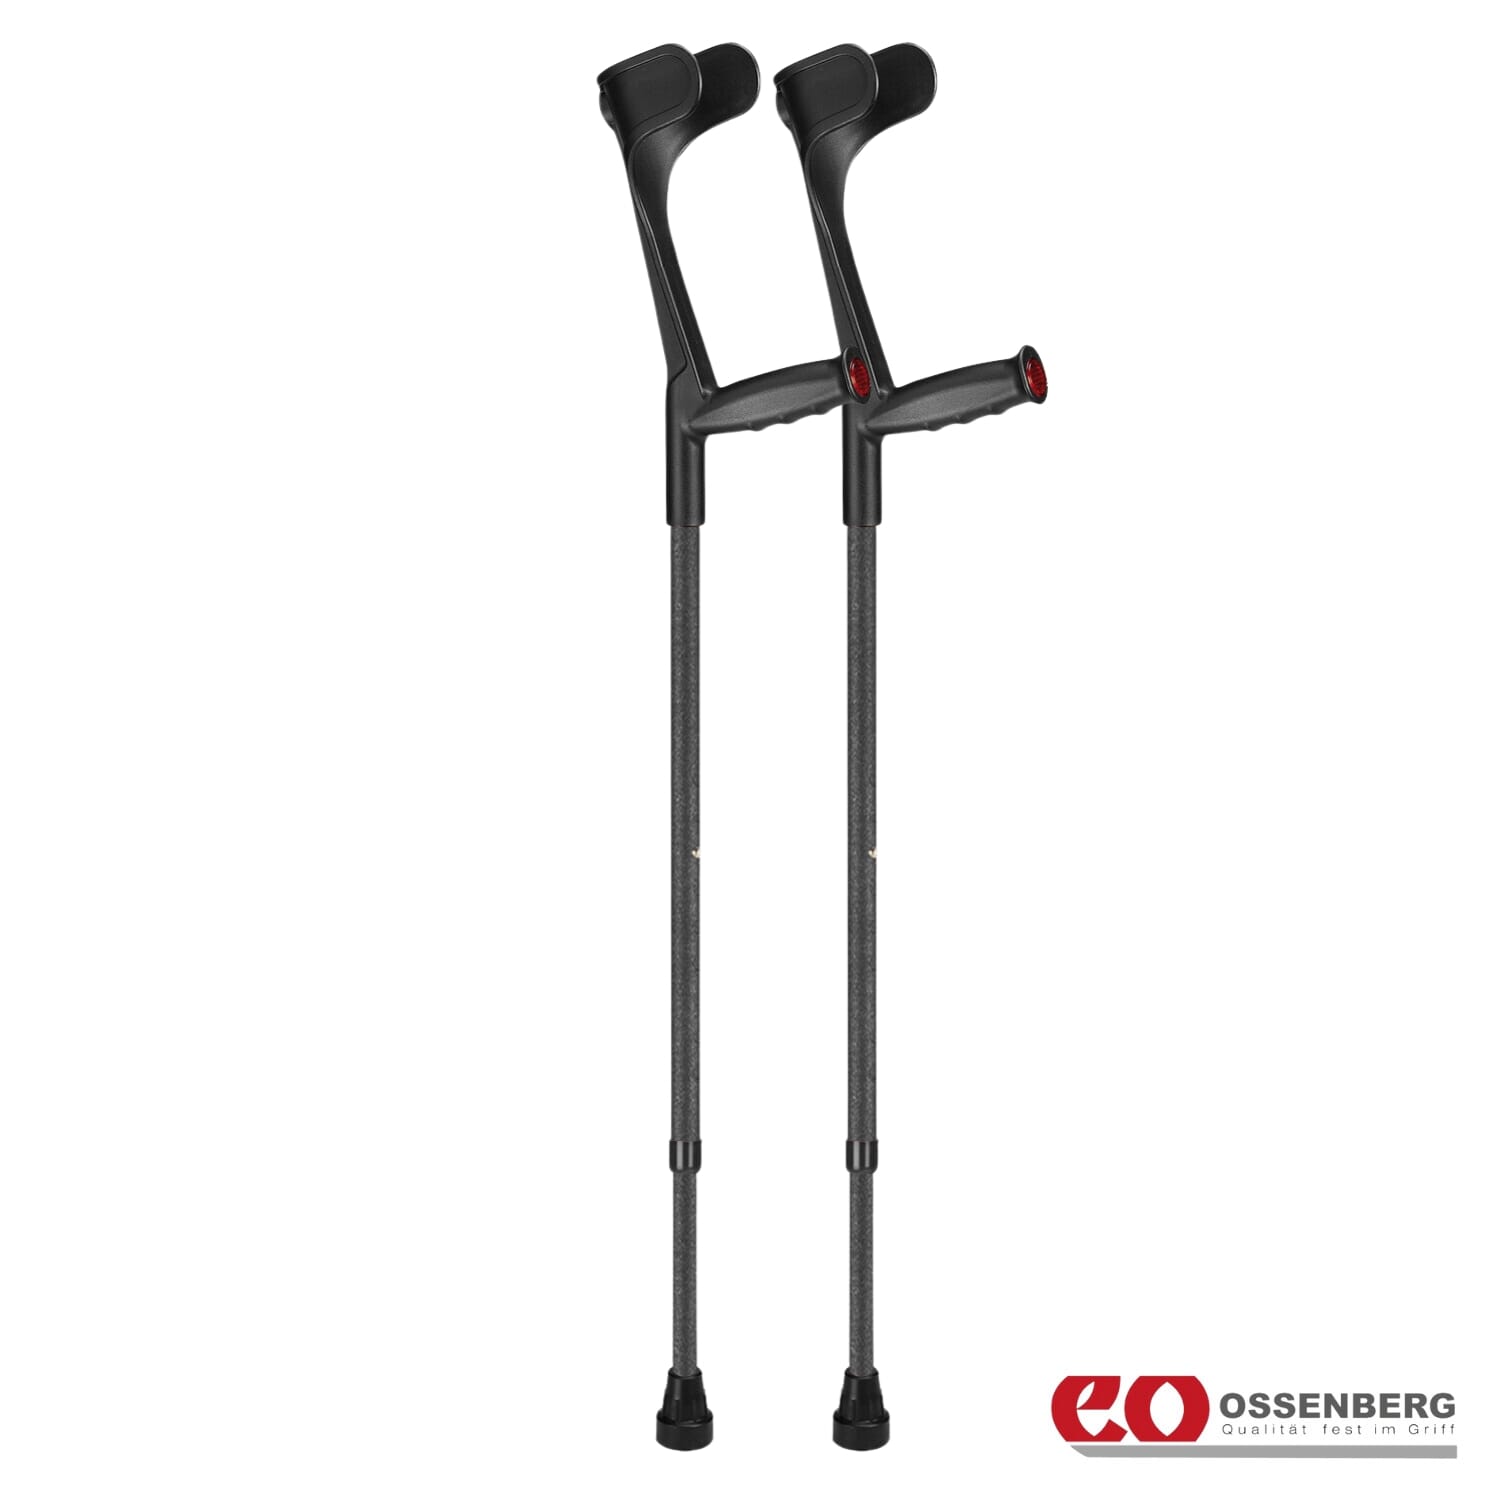 View Ossenberg Open Cuff Soft Grip Crutches Royal Blue Single information